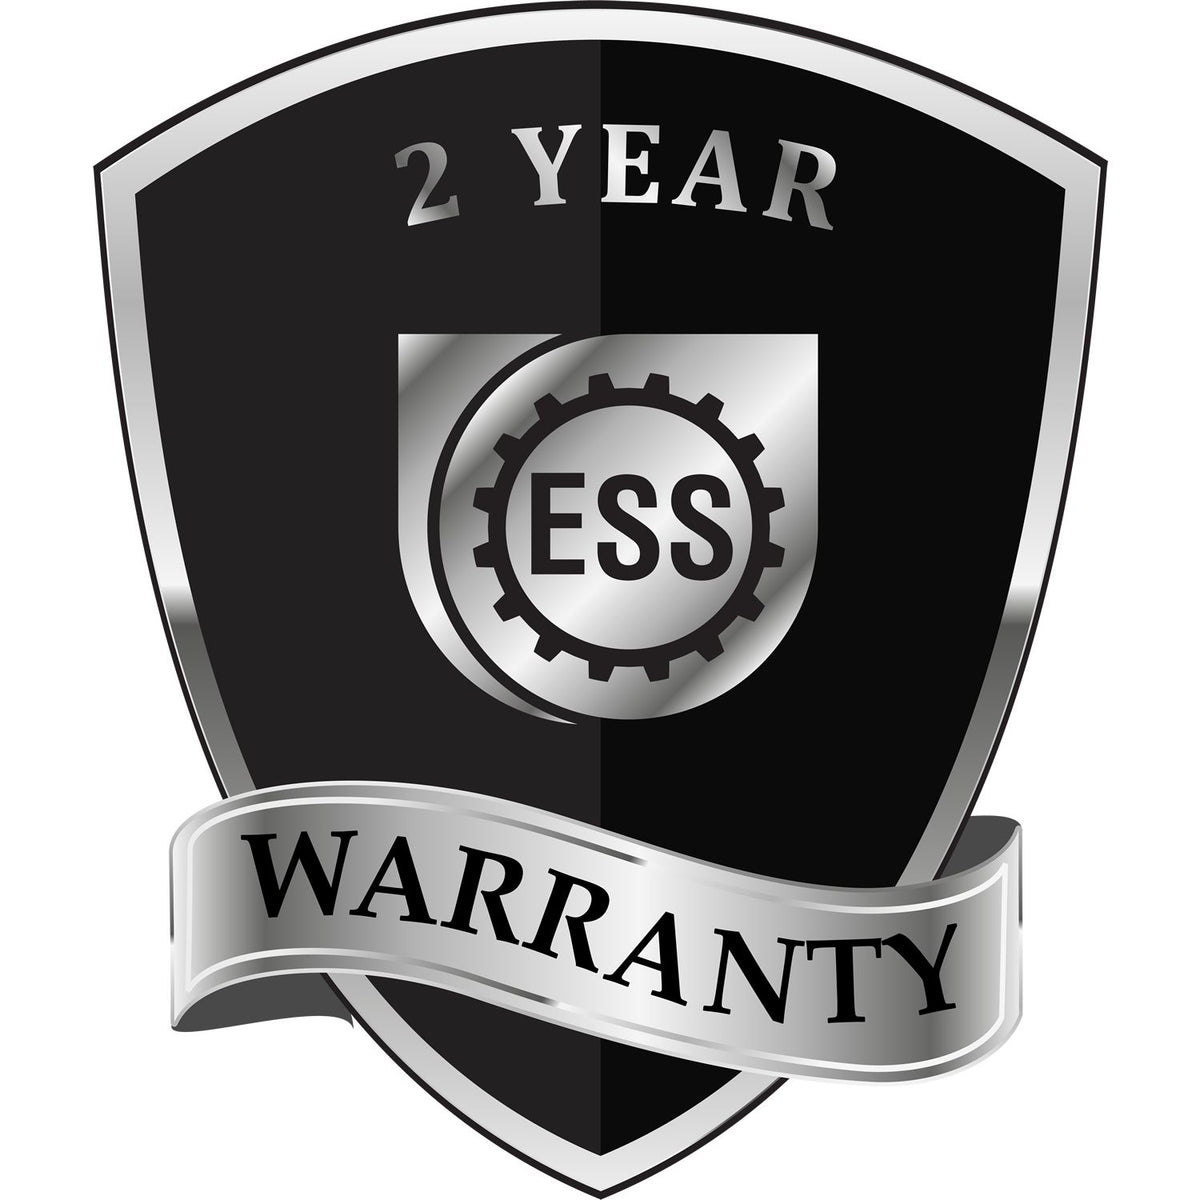 A badge or emblem showing a warranty icon for the Maine Desk Surveyor Seal Embosser